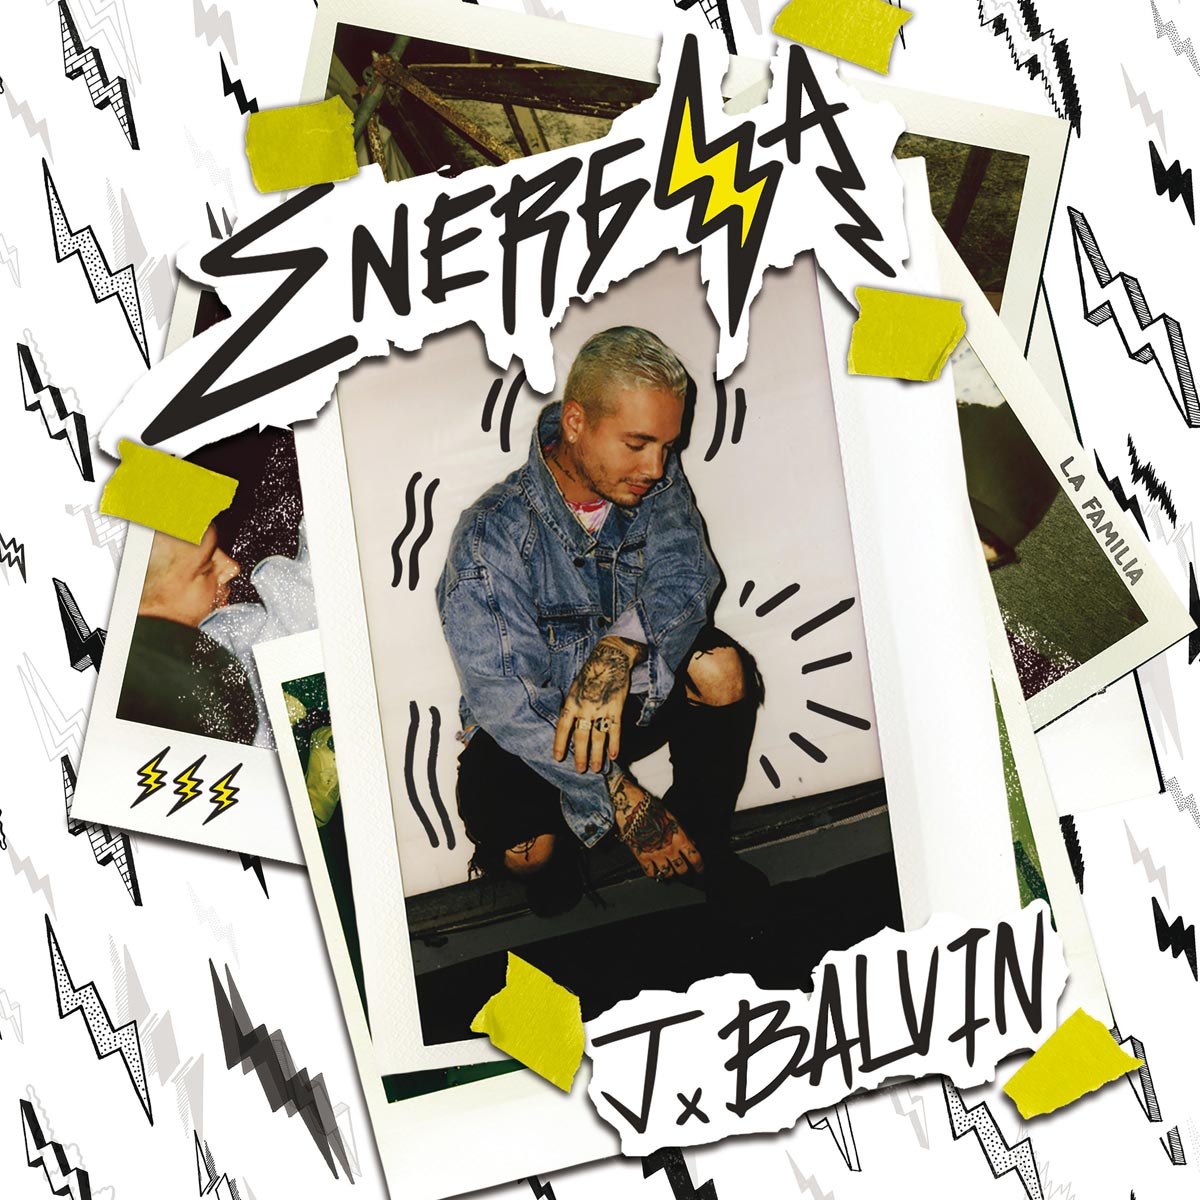 J Balvin: Energía, la portada del disco